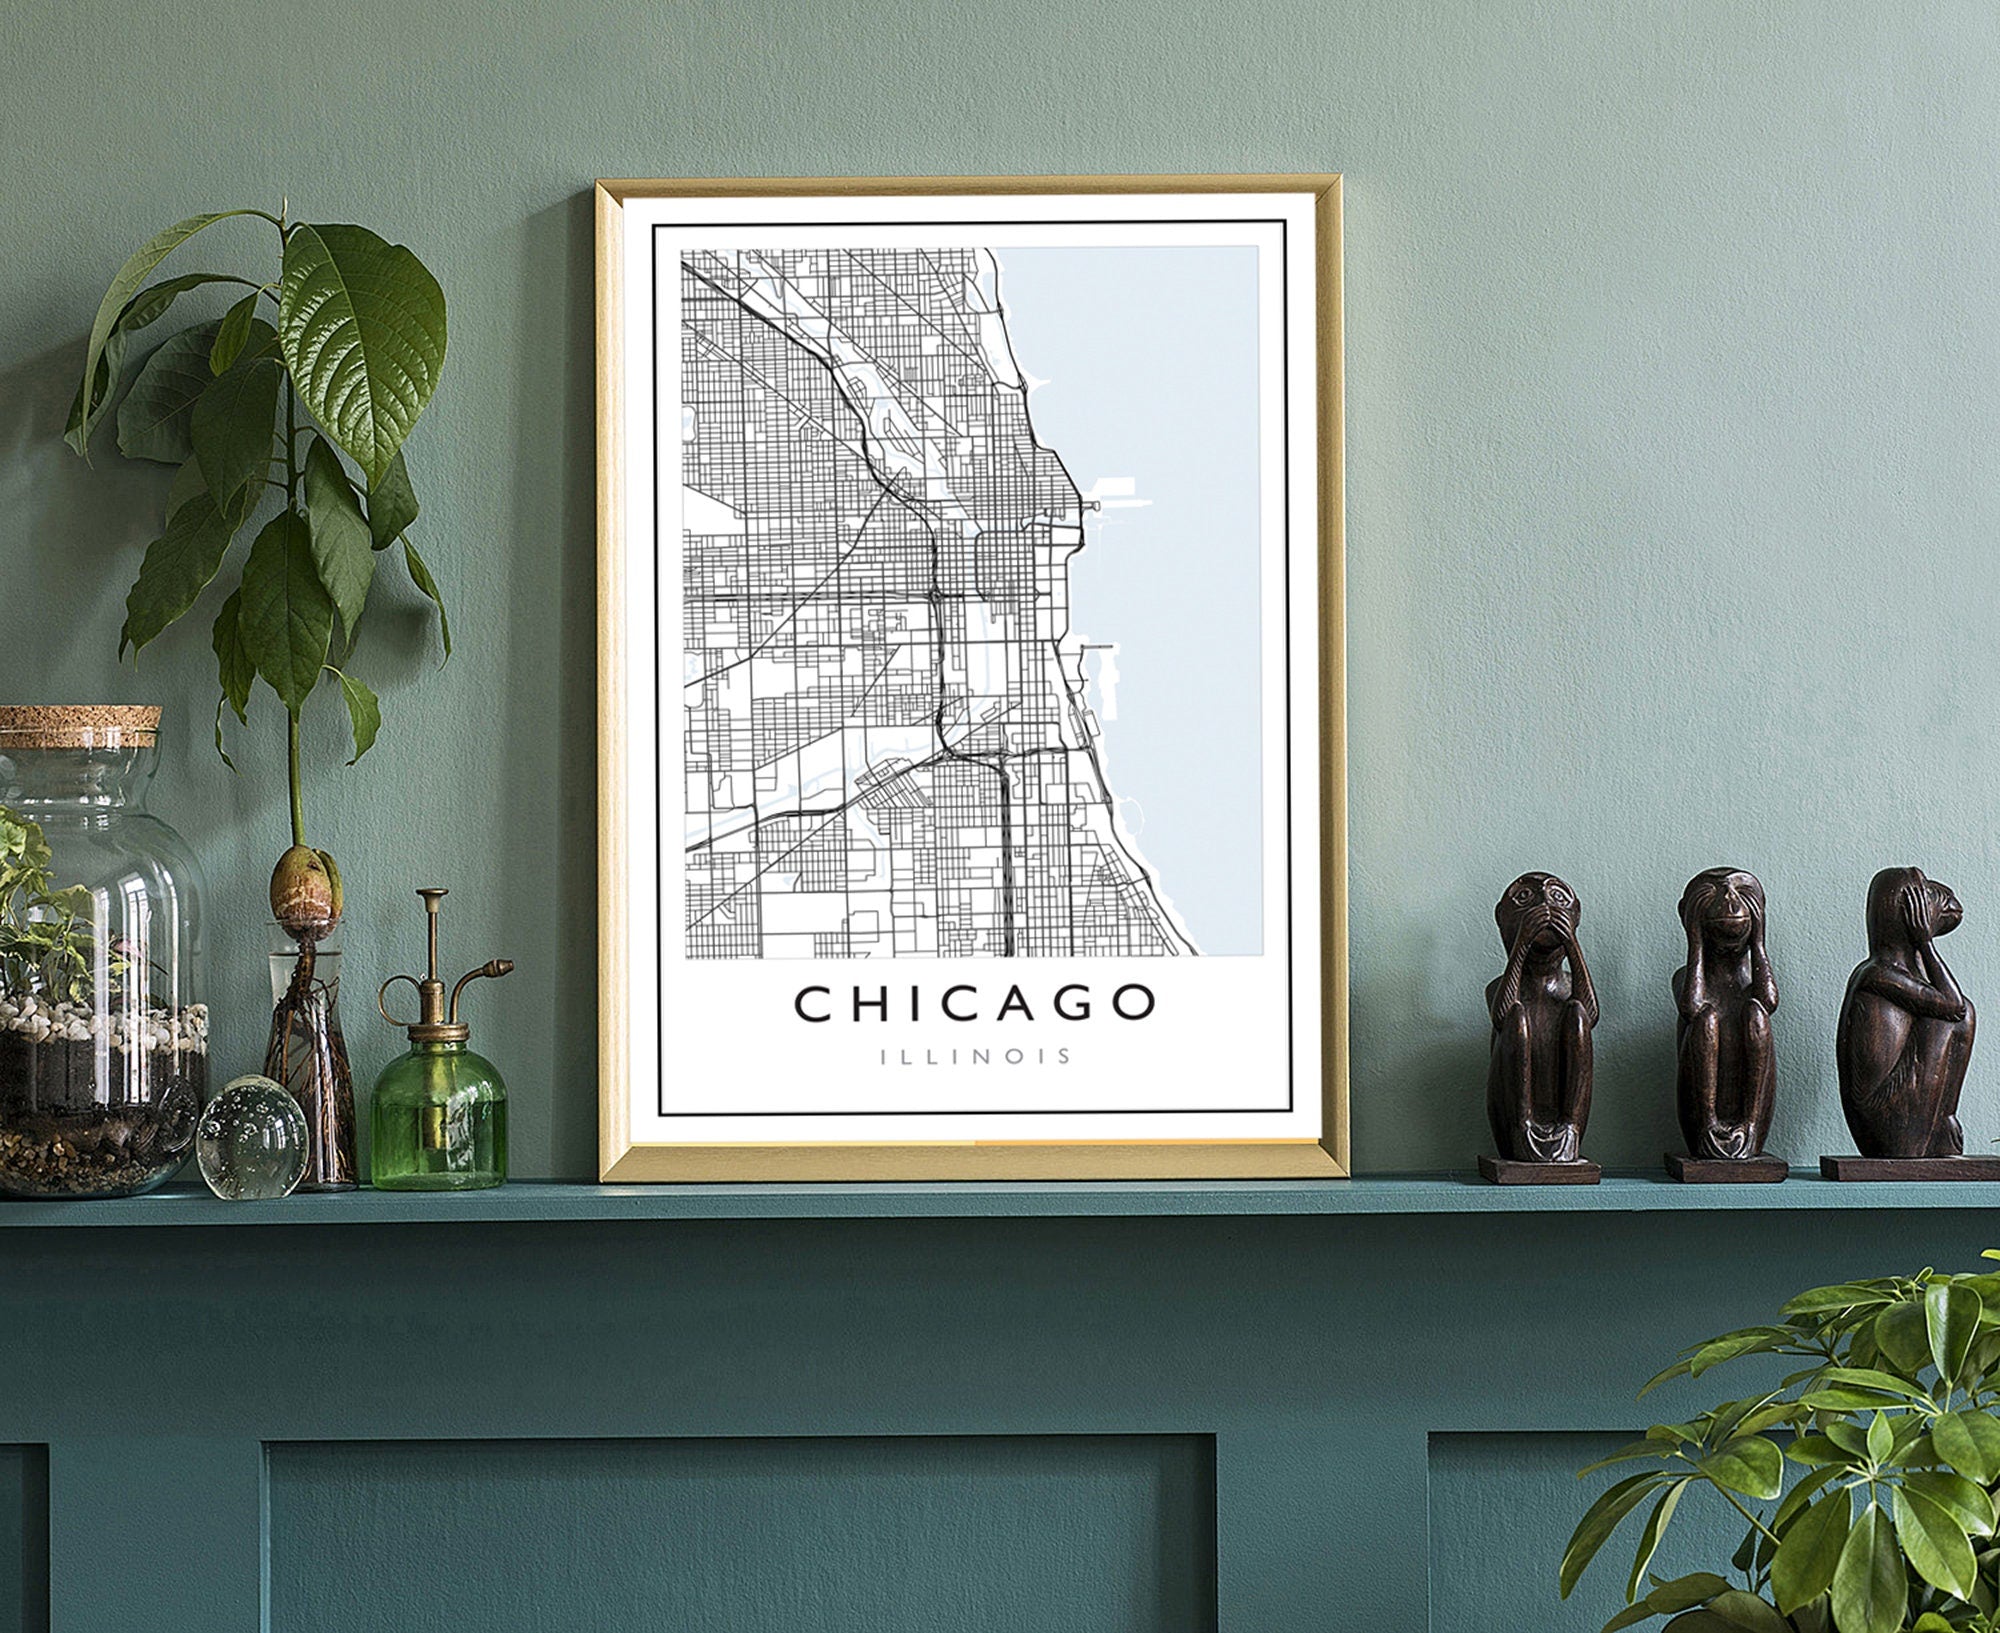 Chicago Illinois City Street Map